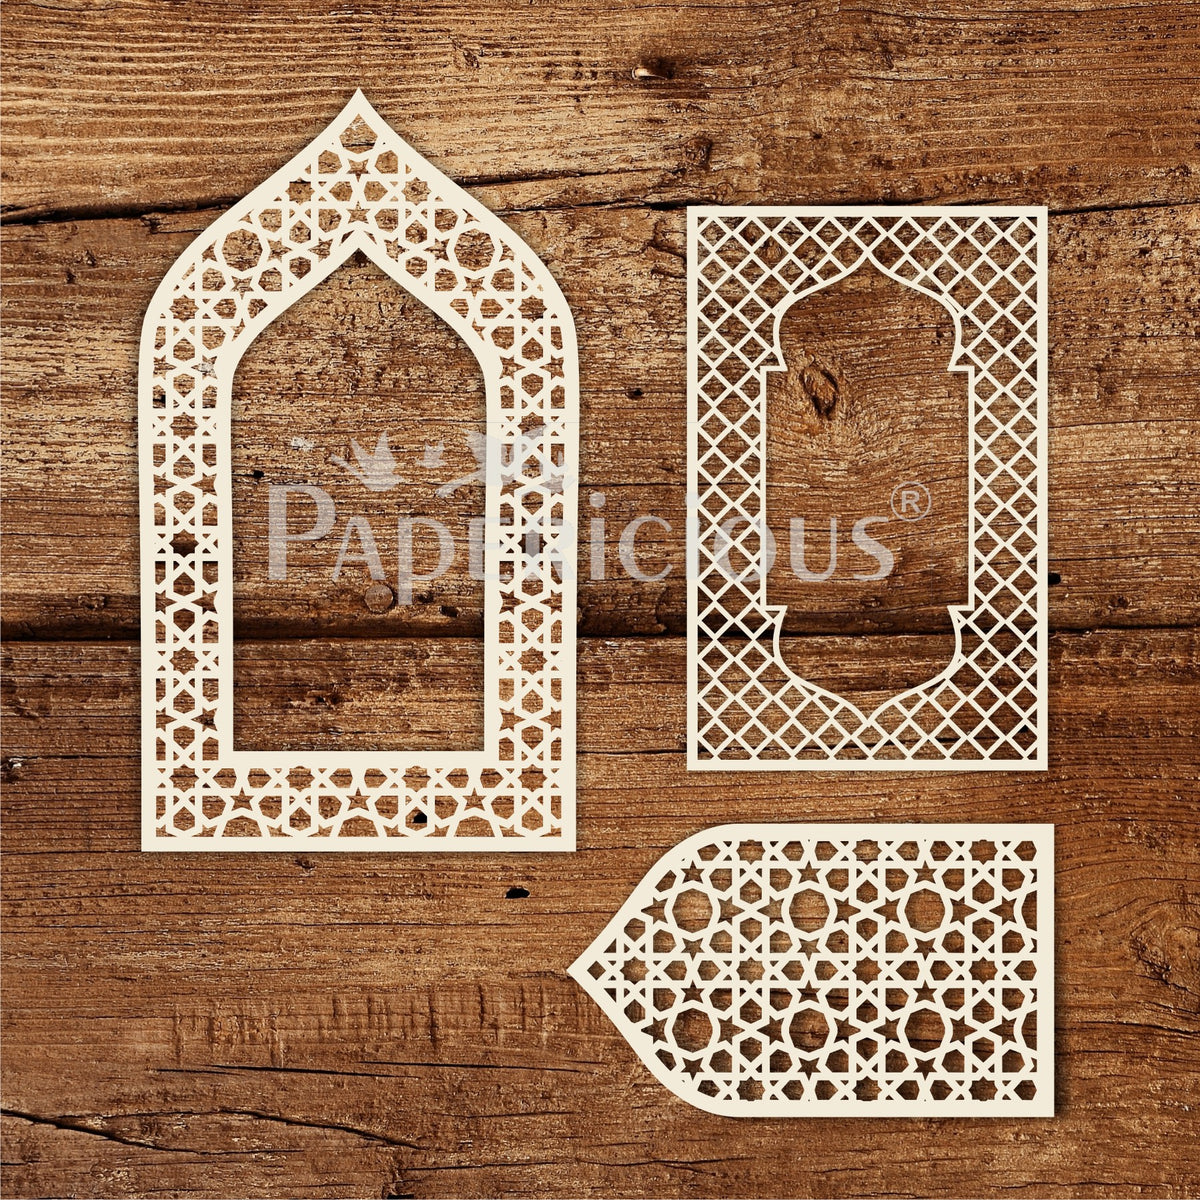 Moroccan Arch - 6x6 Inch Laser Cut Collage Chipboard